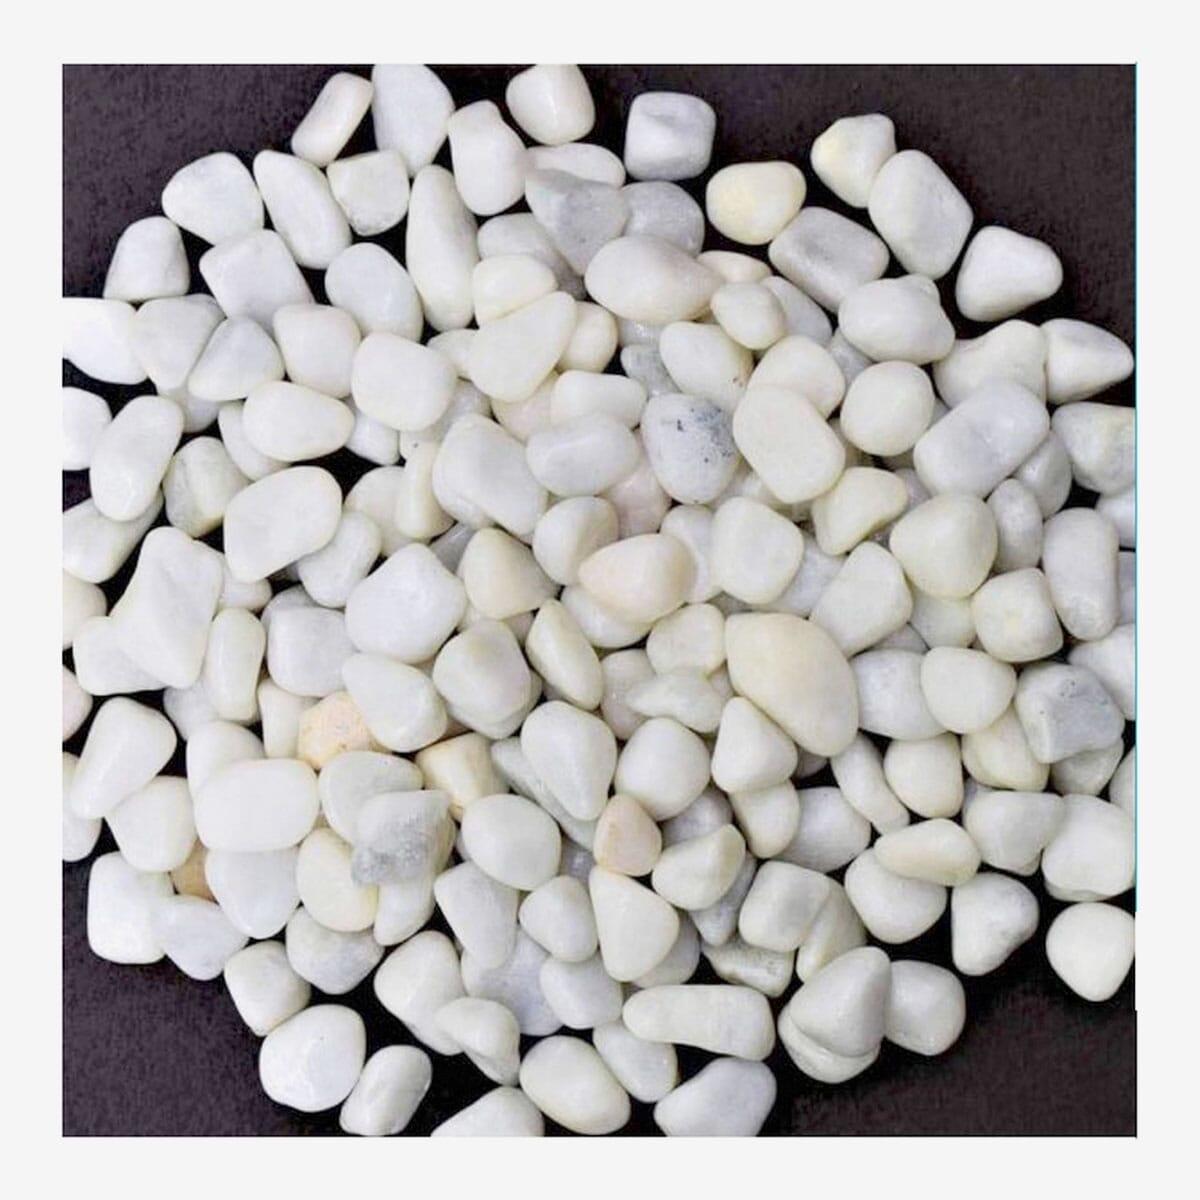 white stone 500gm pebbles for aquarium decoration stones decor pebble natural white polished stones 500gm by hamropets